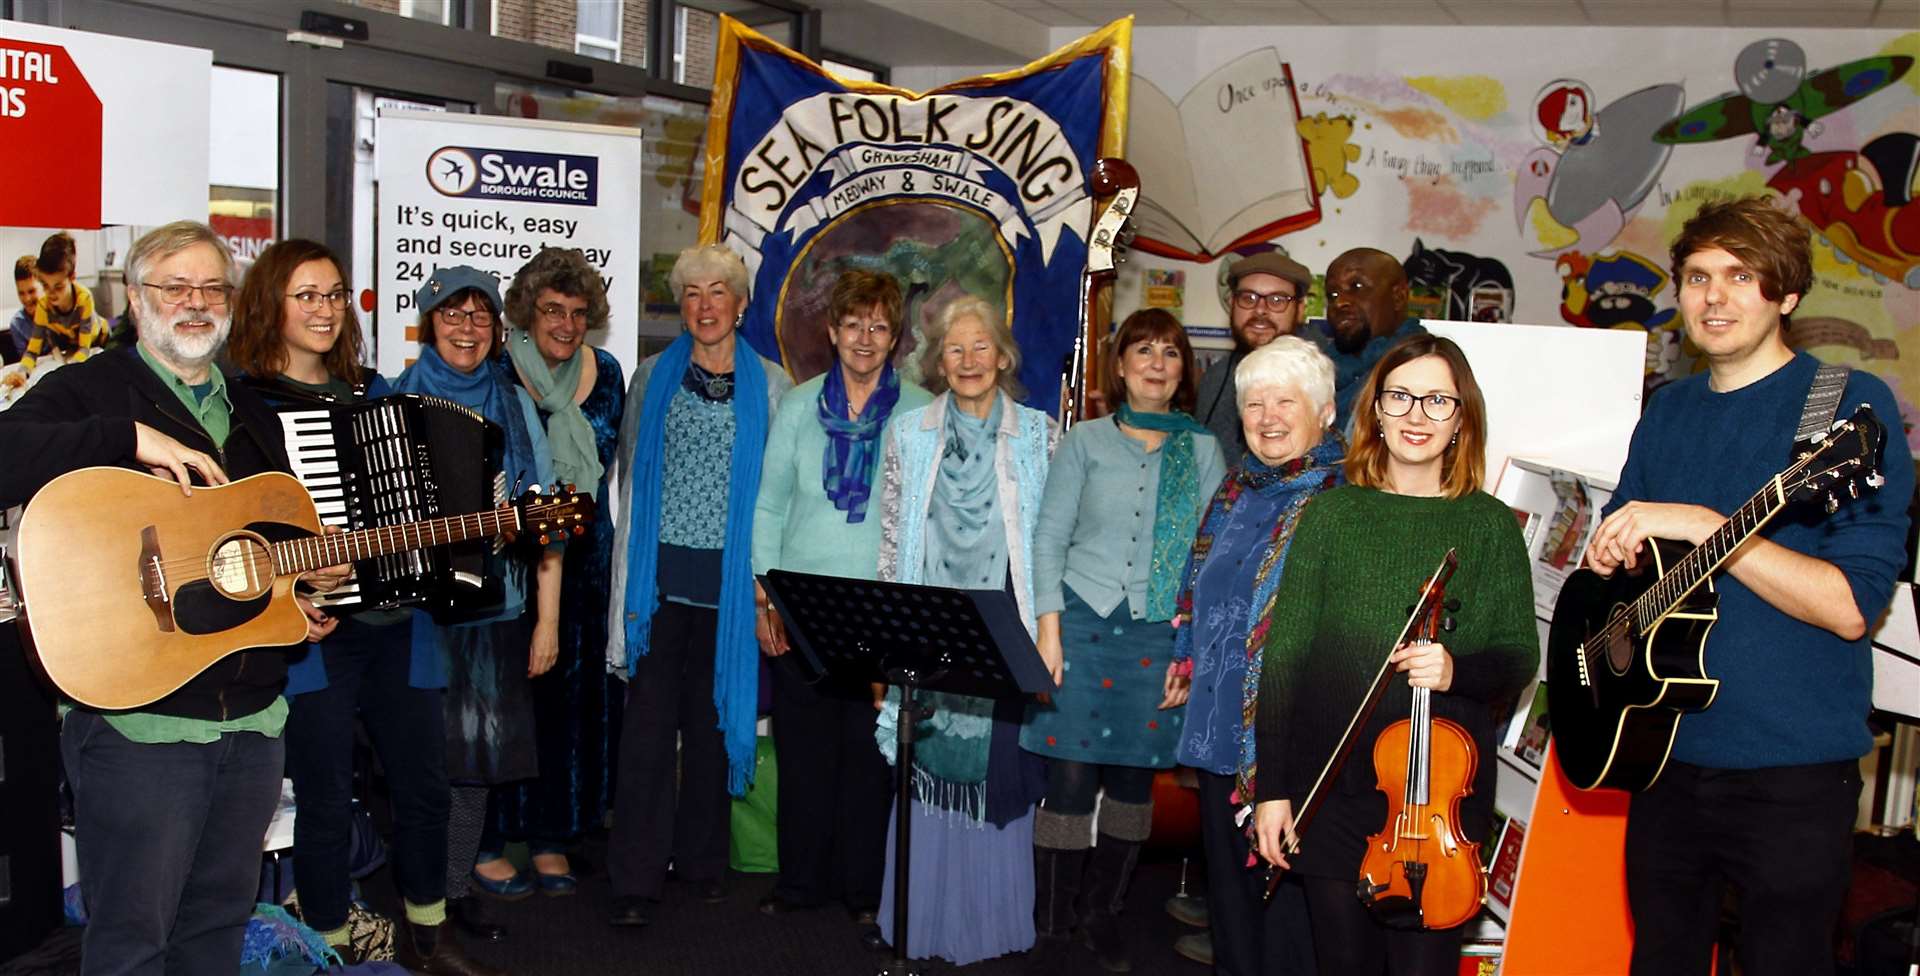 Sea Folk Sing, community choir free concert at Sheppey Gateway, Sheerness.Picture: Sean Aidan (22371335)